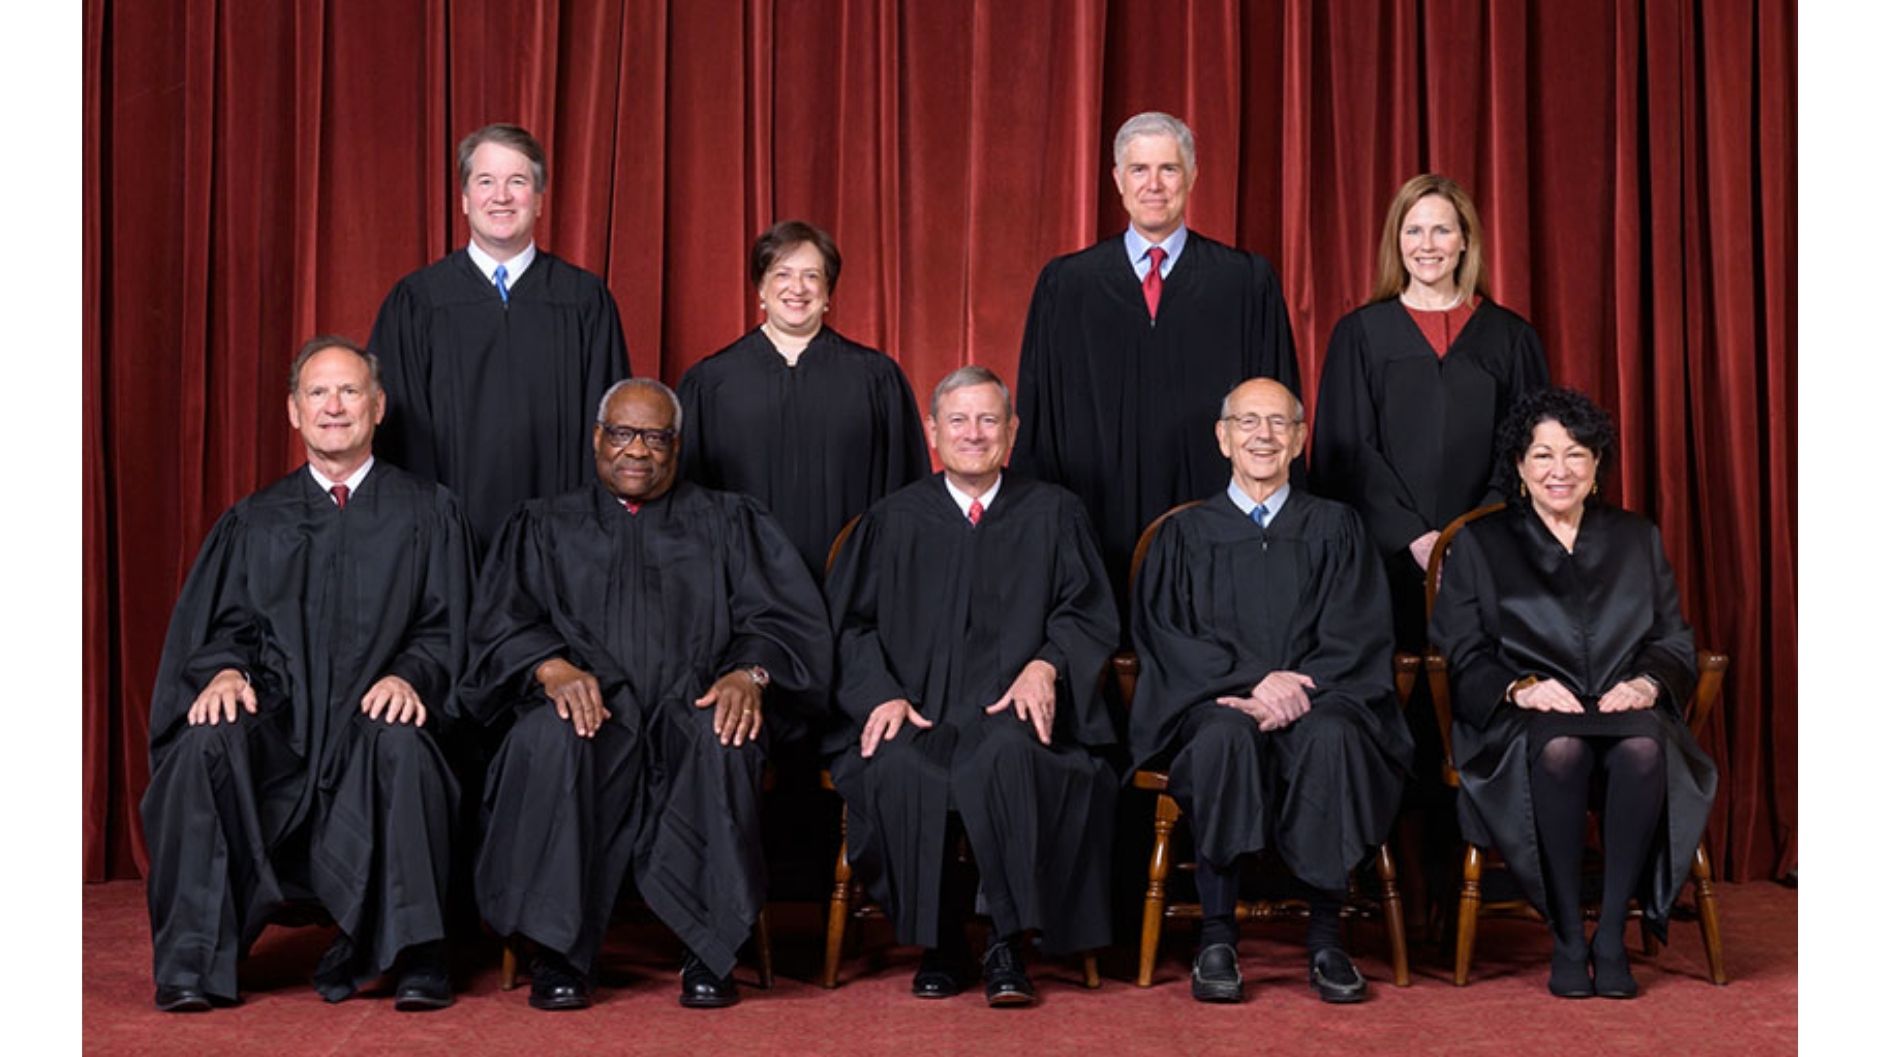 At Supreme Court, it's do as I say not as I do | Courthouse News Service